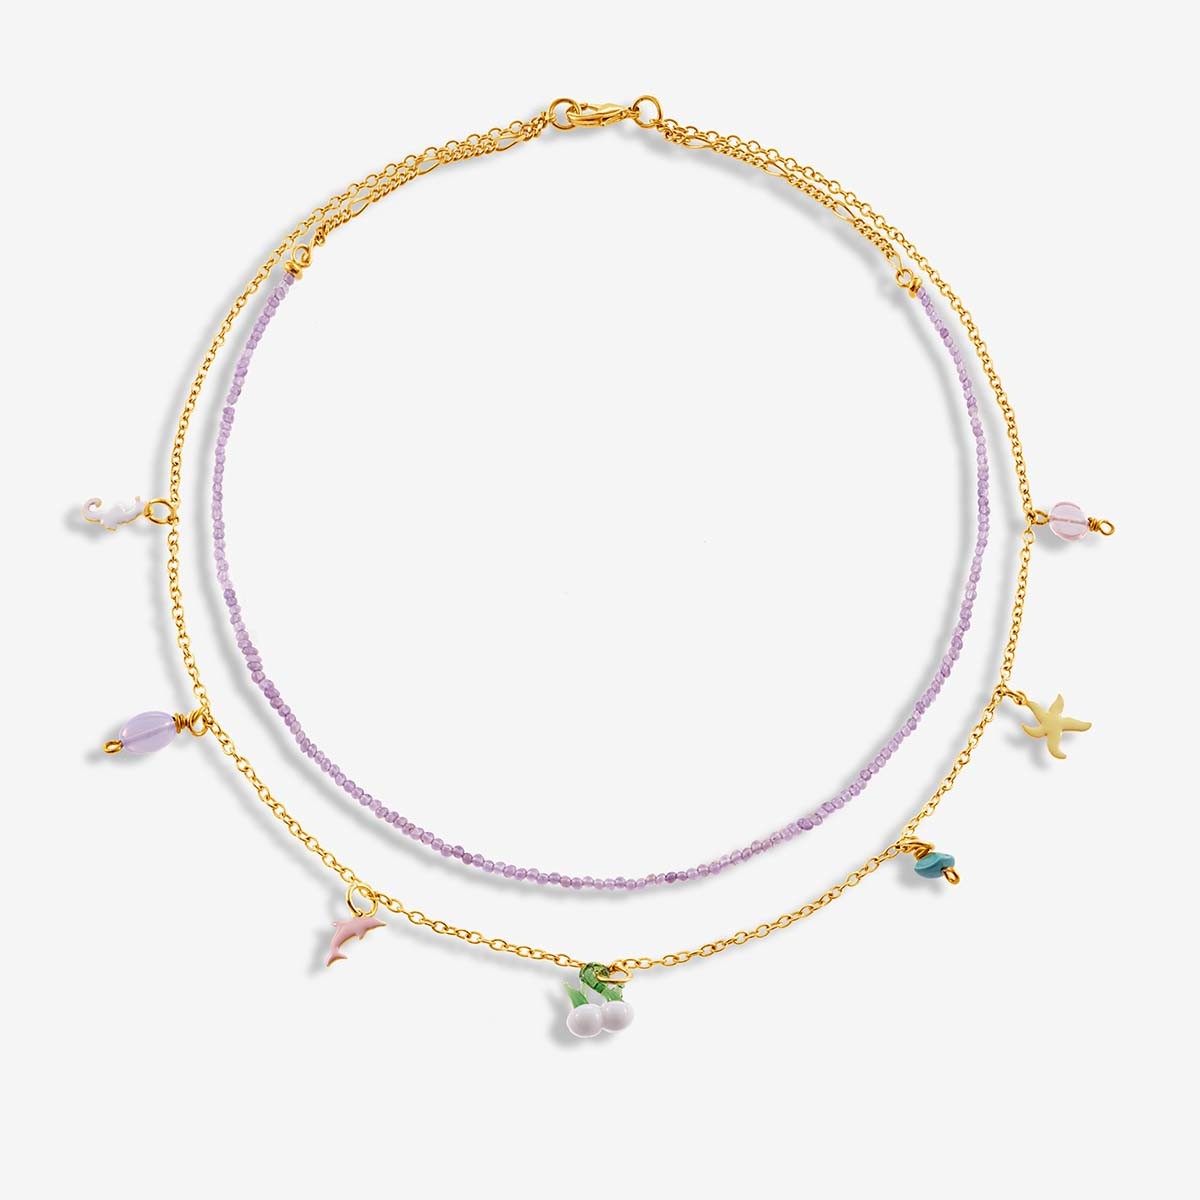 Ying Yang Necklace - Halskette - Lila - 18k vergoldet